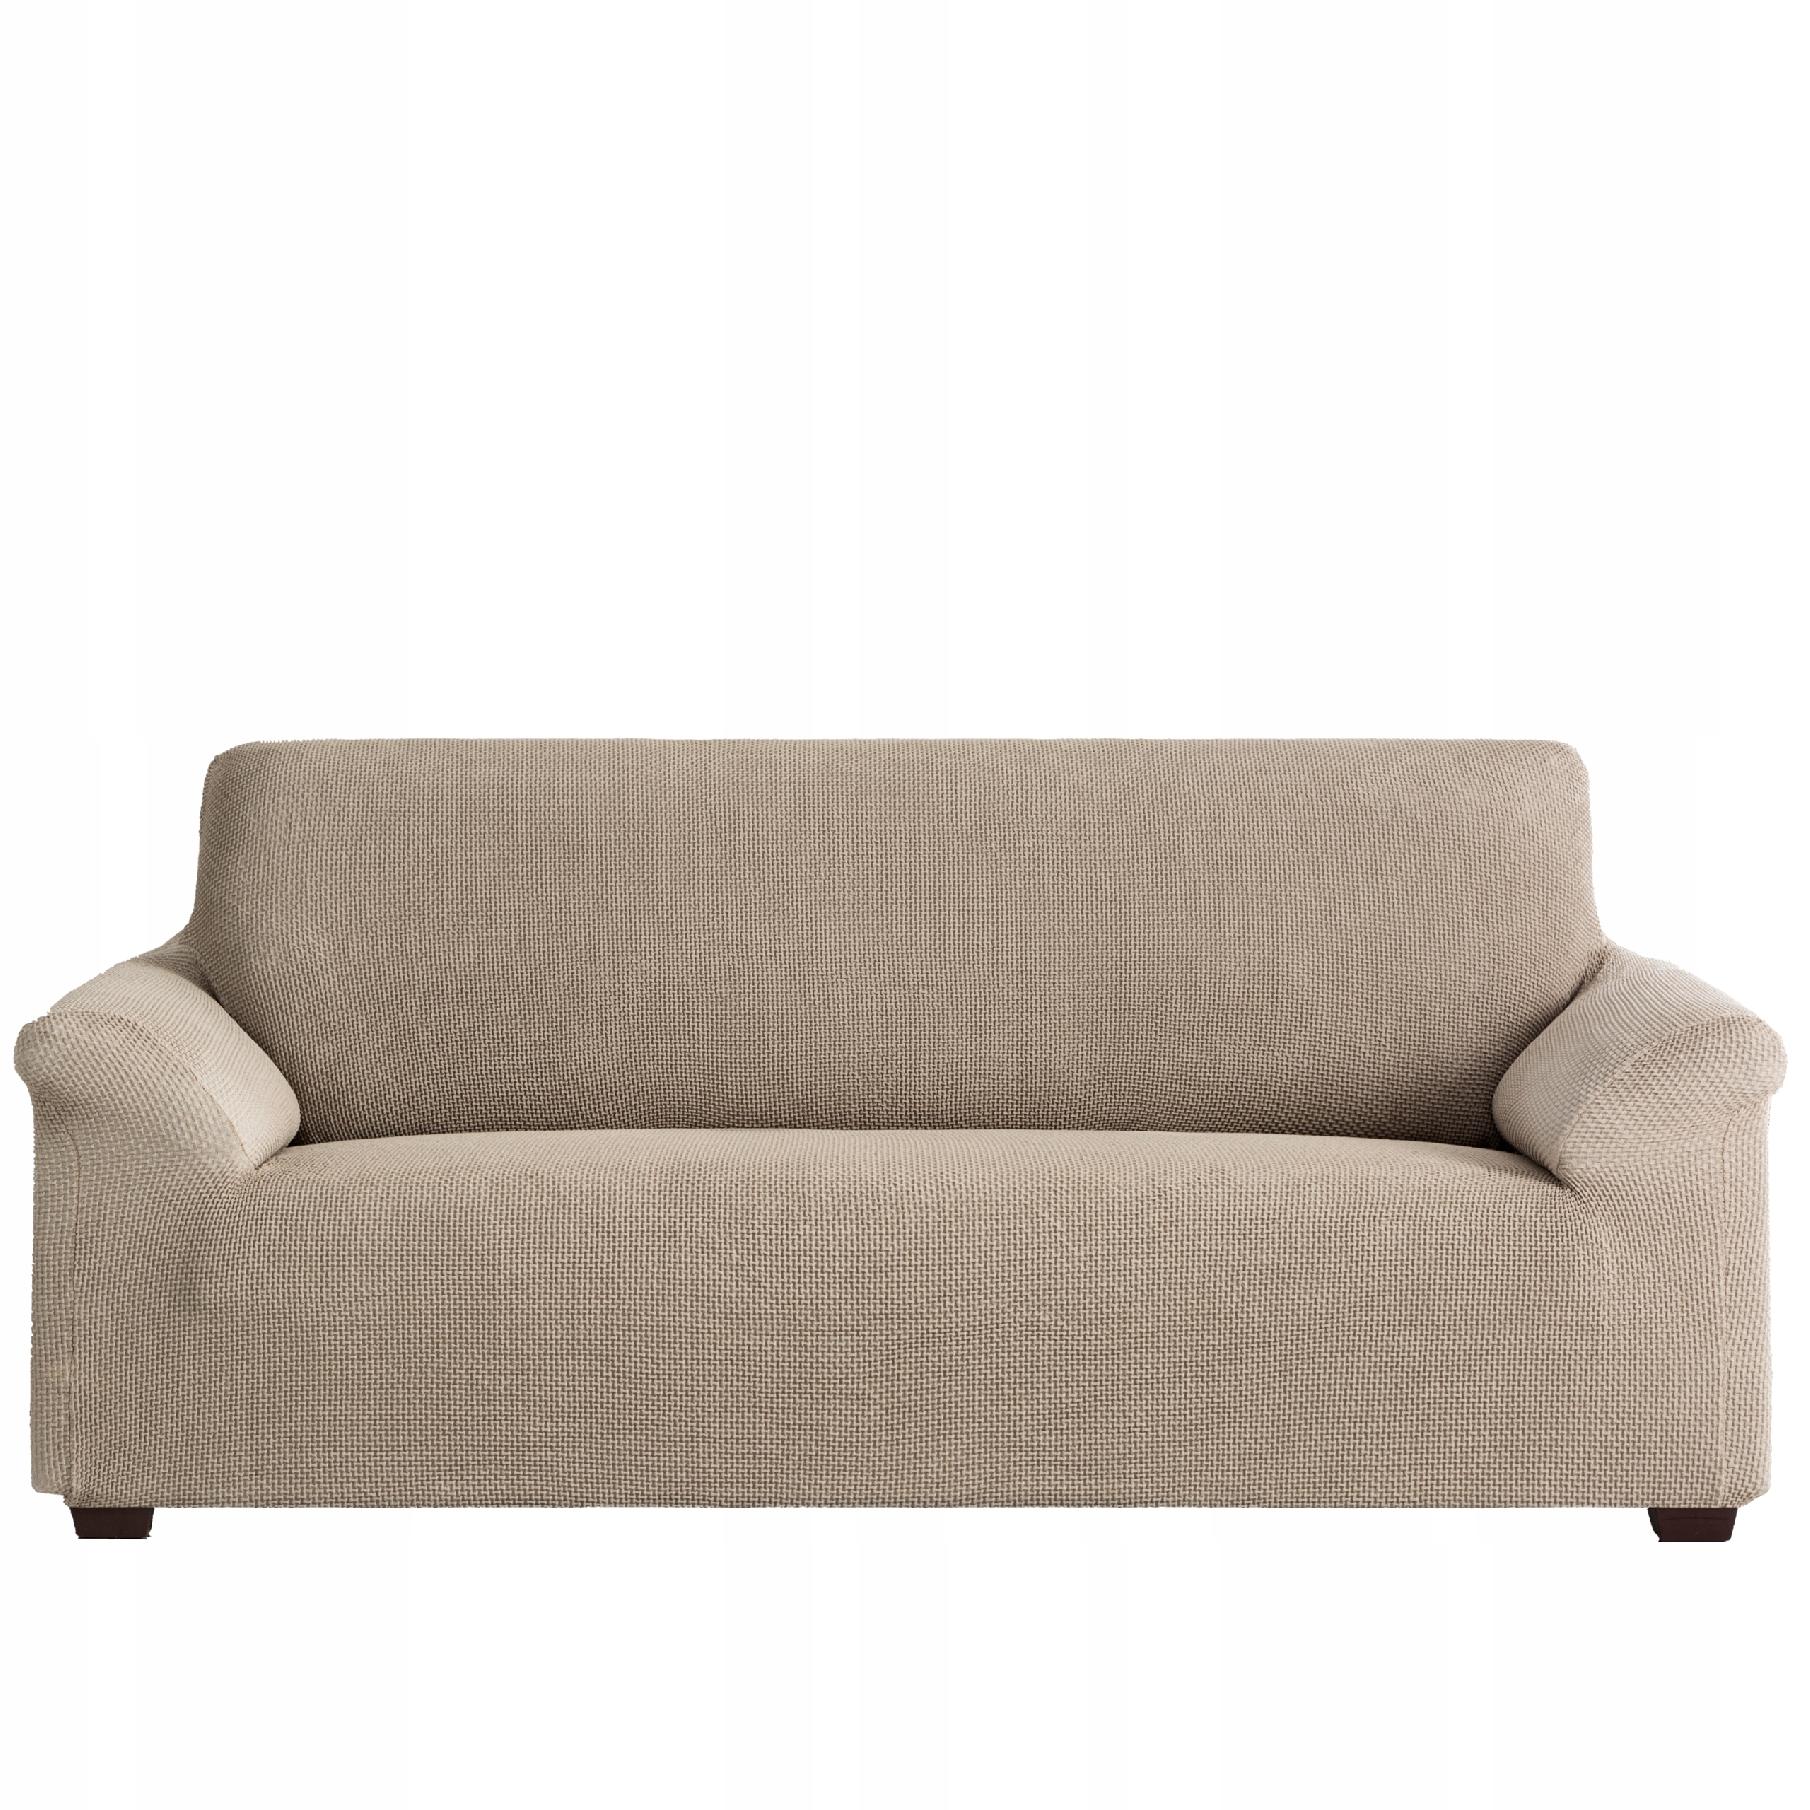 BELMARTI Elastic cover for a 2-seater sofa